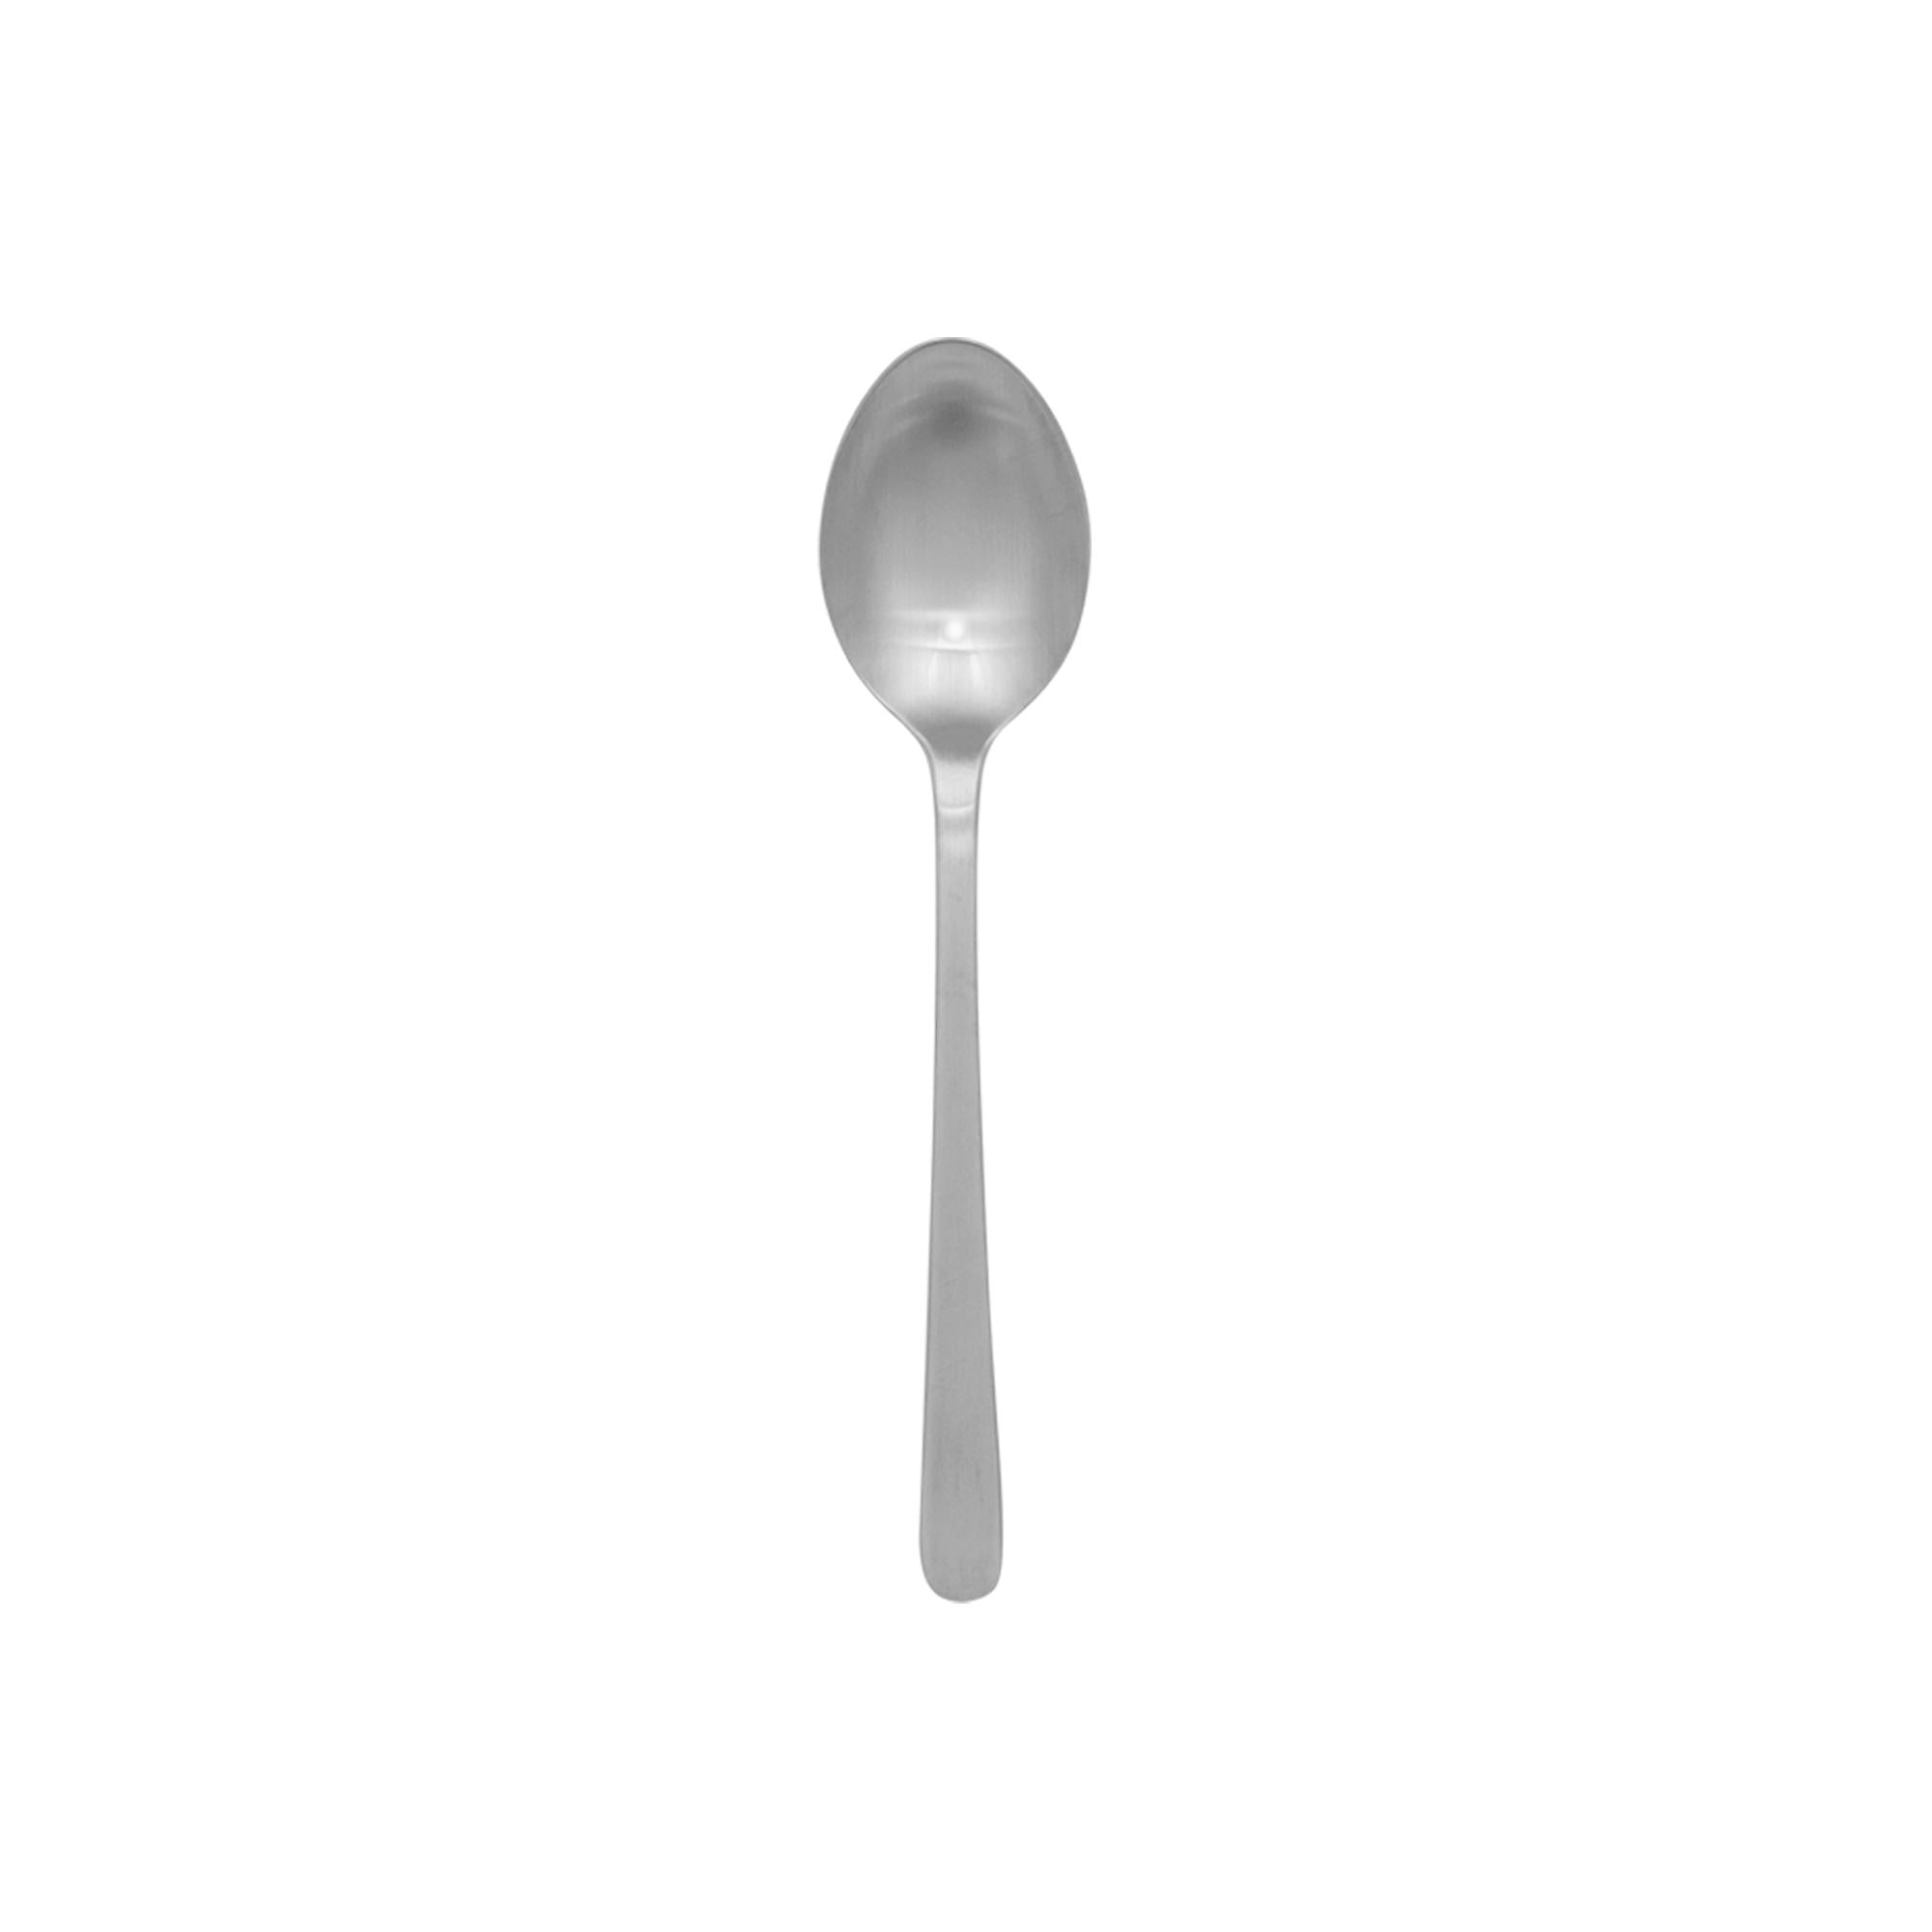 Kay Bojesen Grand Prix Spoon Small / Children's Spoon, acero mate